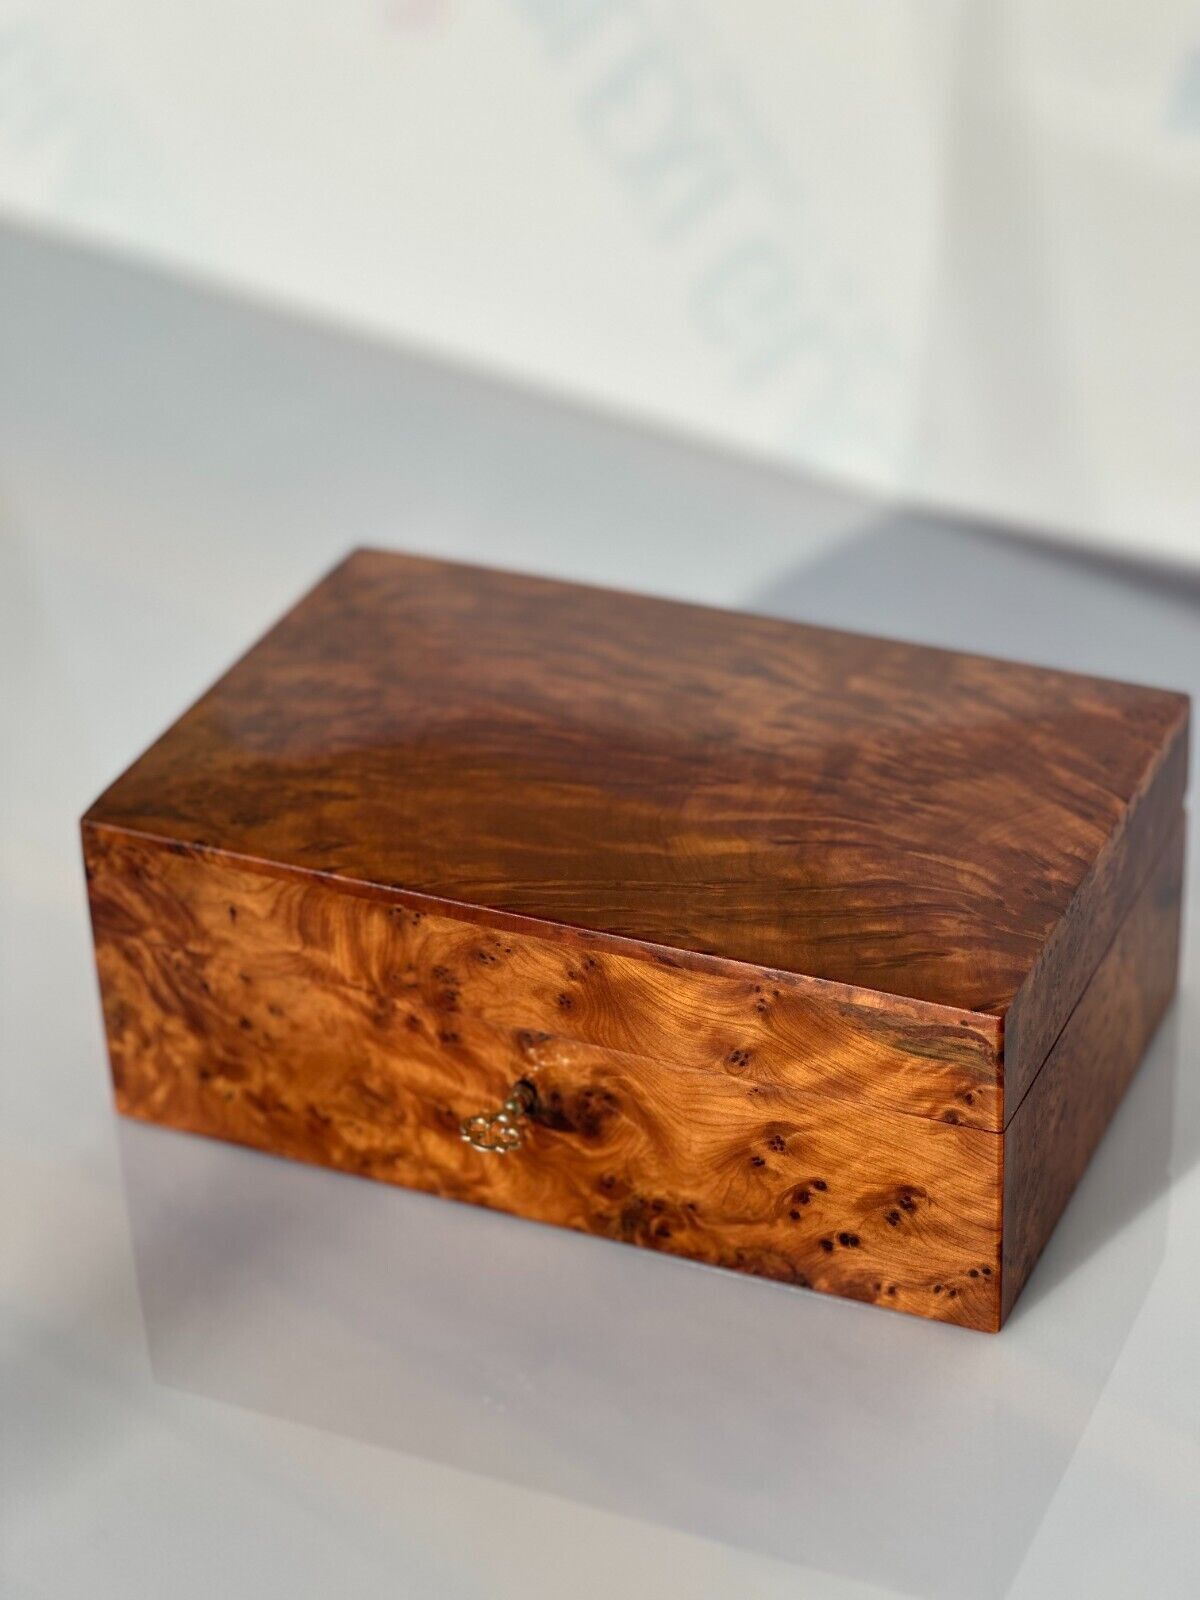 wooden jewelry box, thuya wood handmade morocco large box with tray inside box